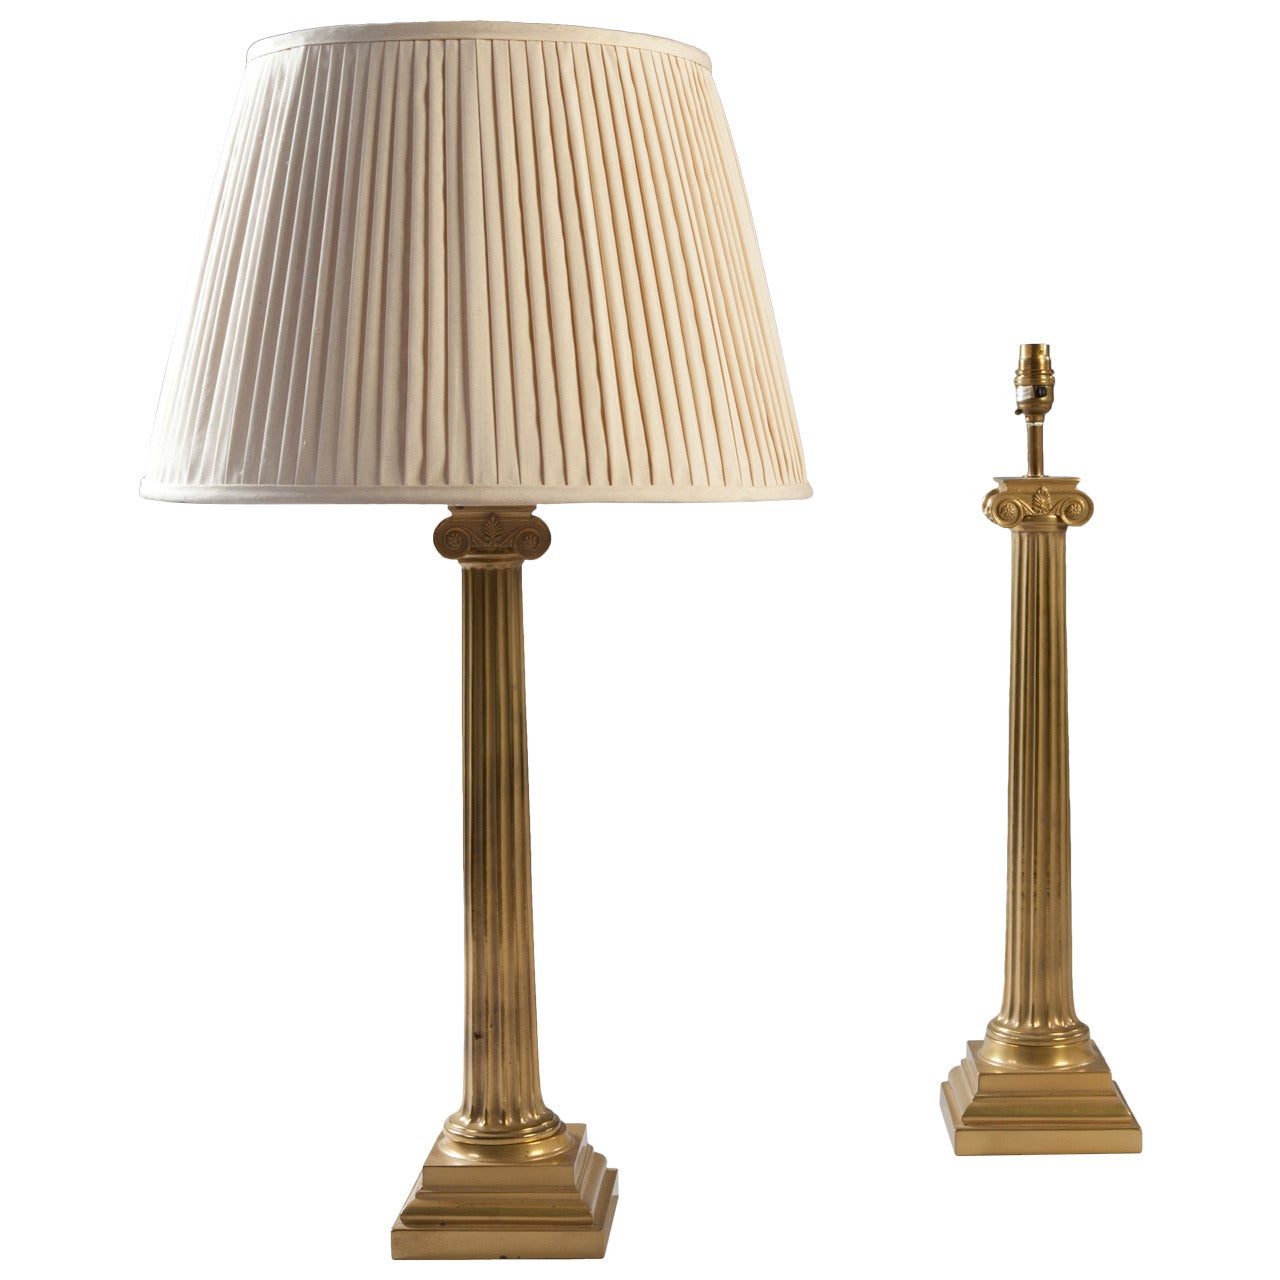 Pair of Edwardian Brass Column Lamps